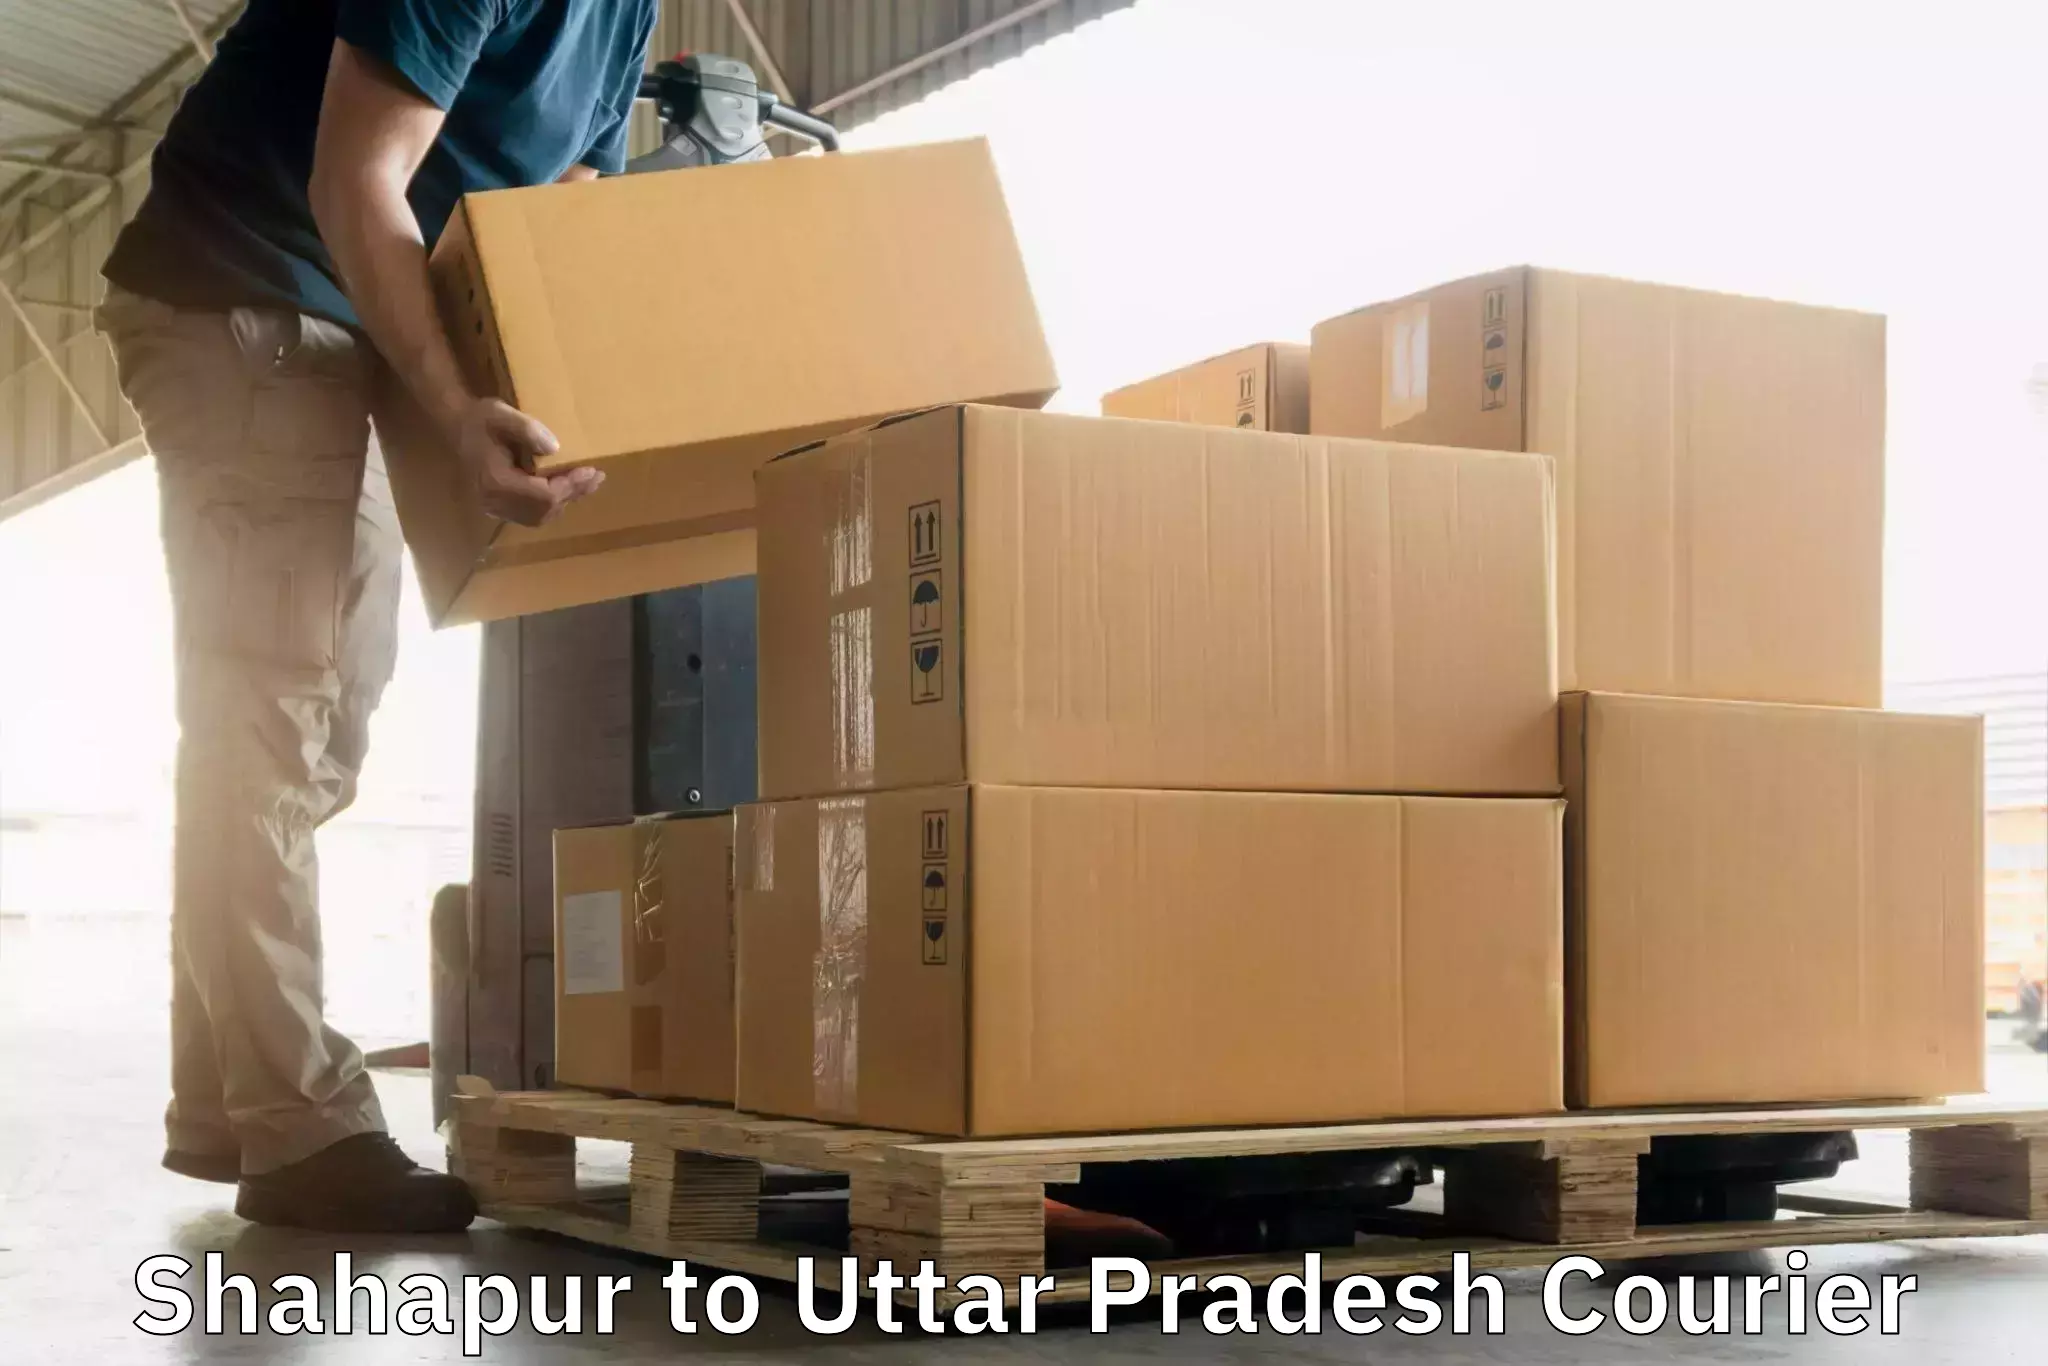 Digital courier platforms Shahapur to Uttar Pradesh